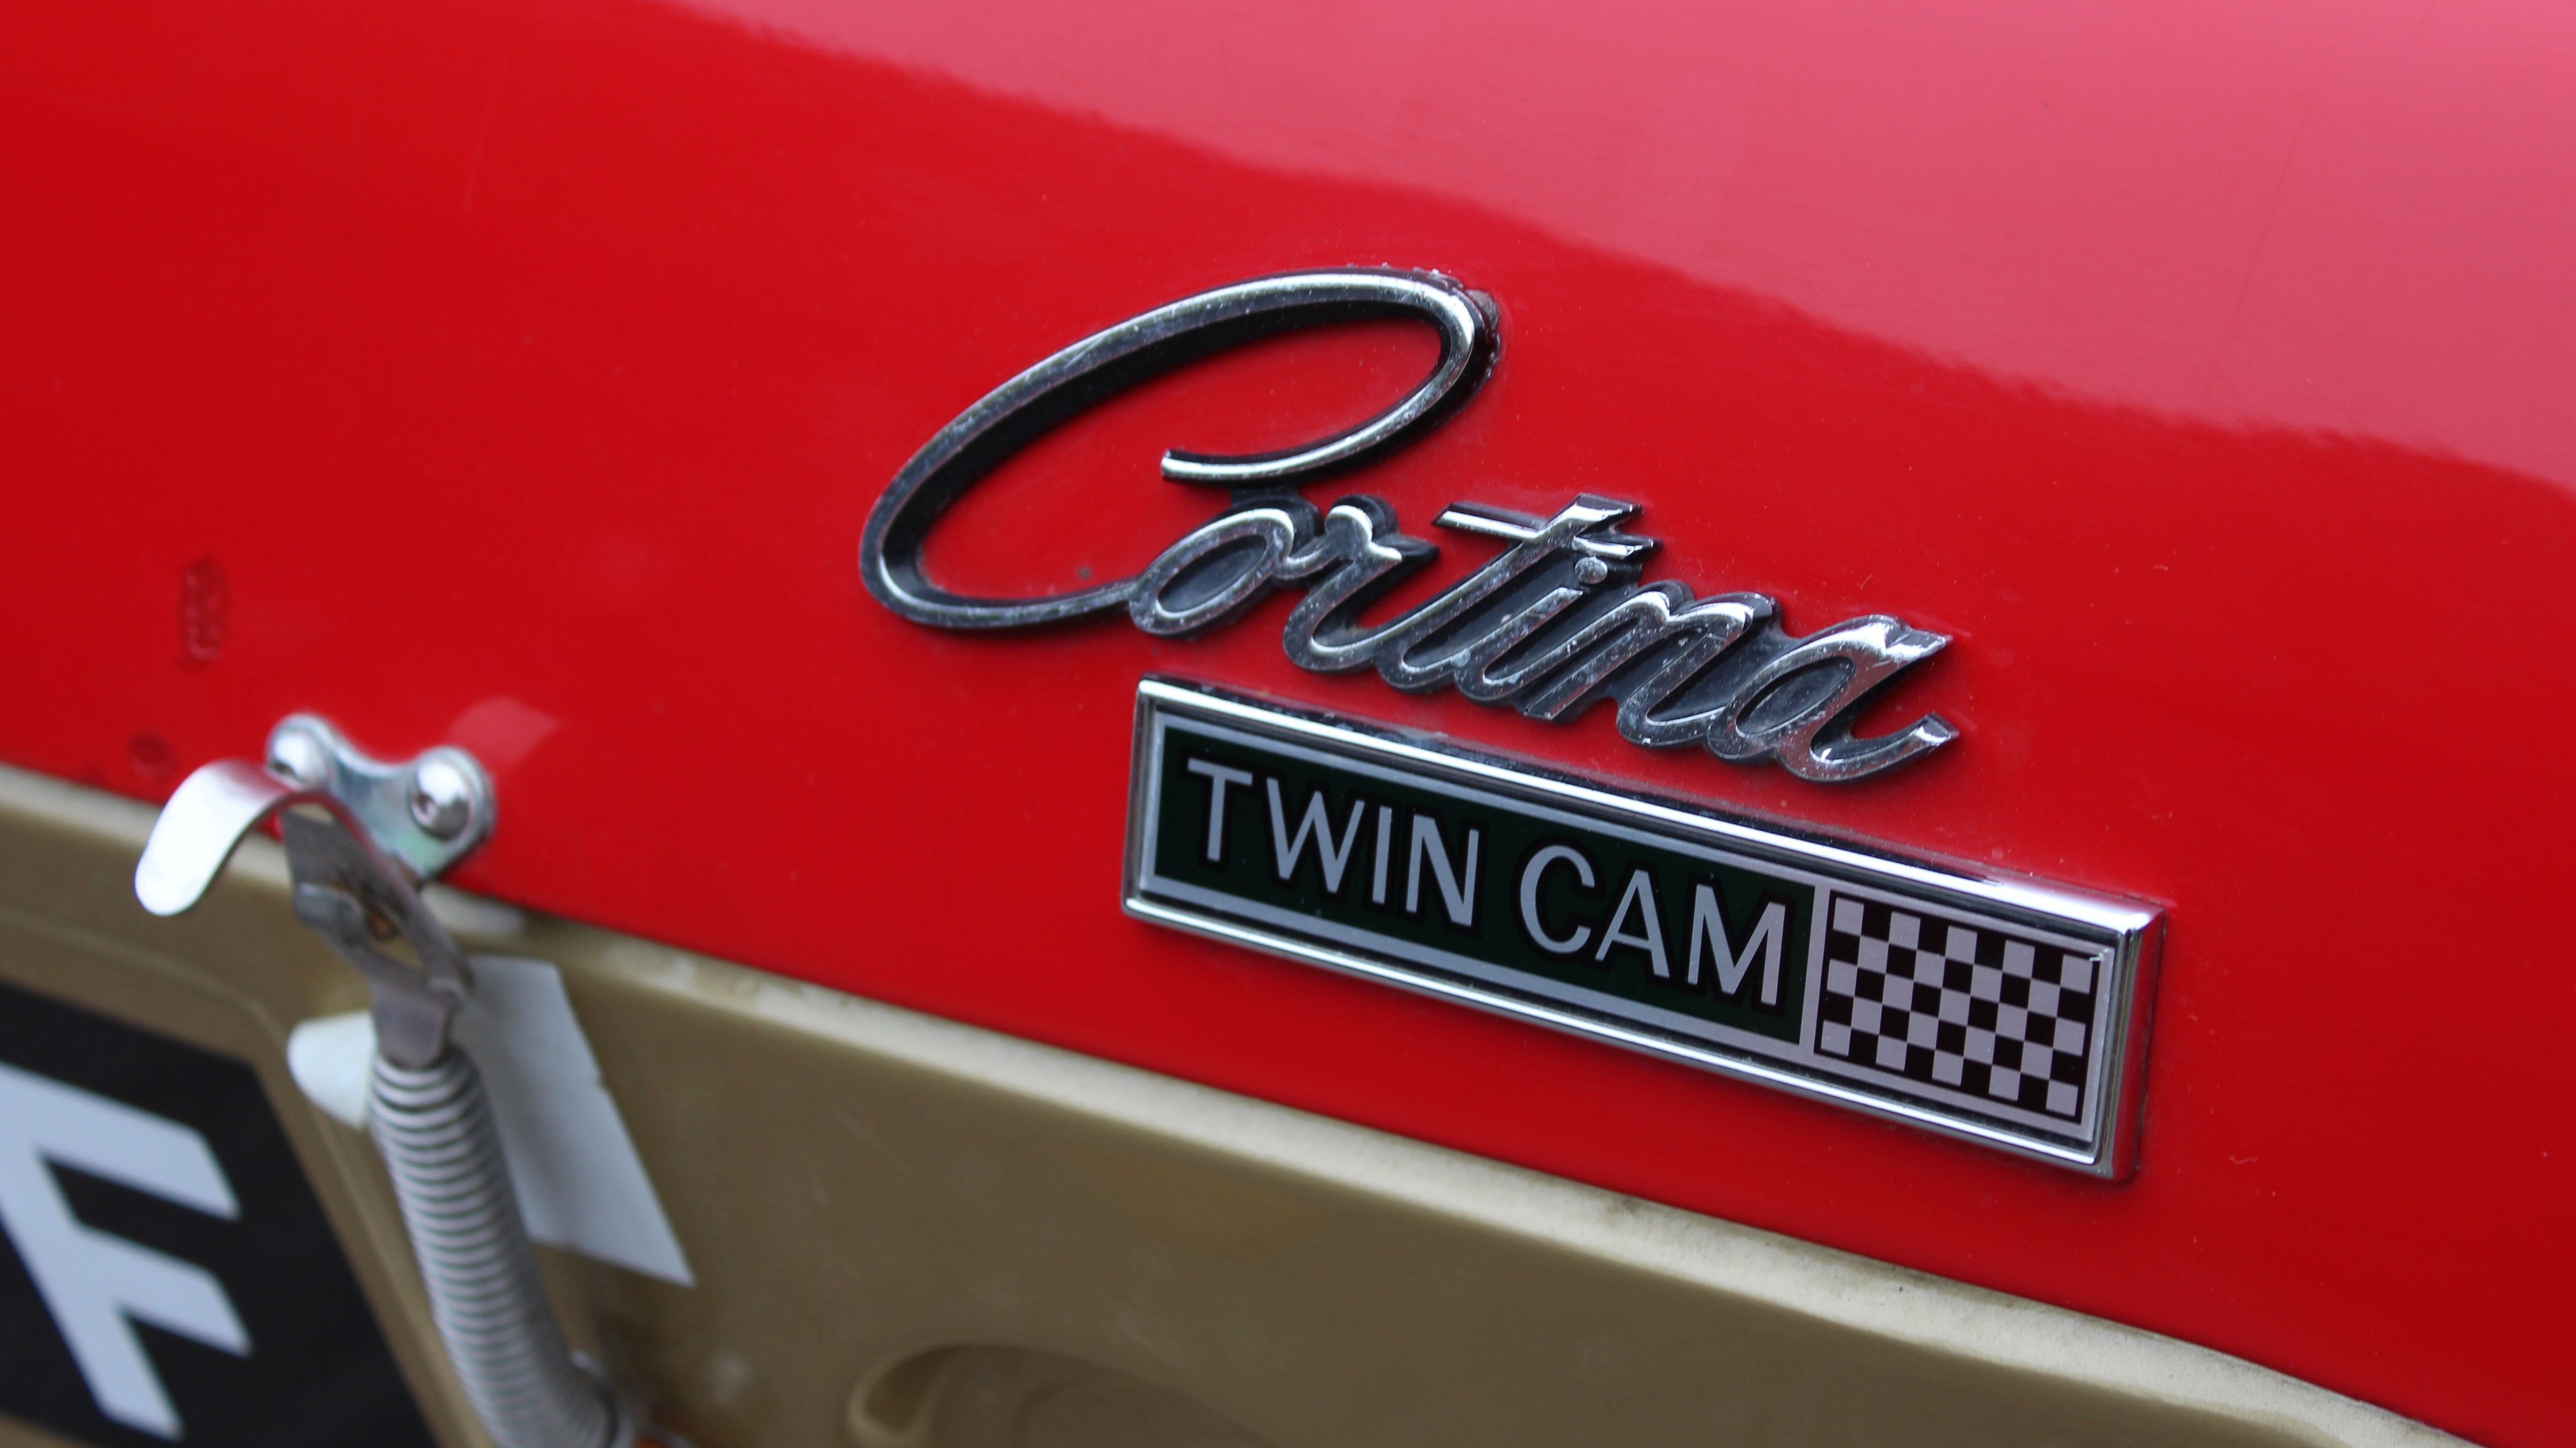 ford Lotus Cortina Mk2 detalj twin cam